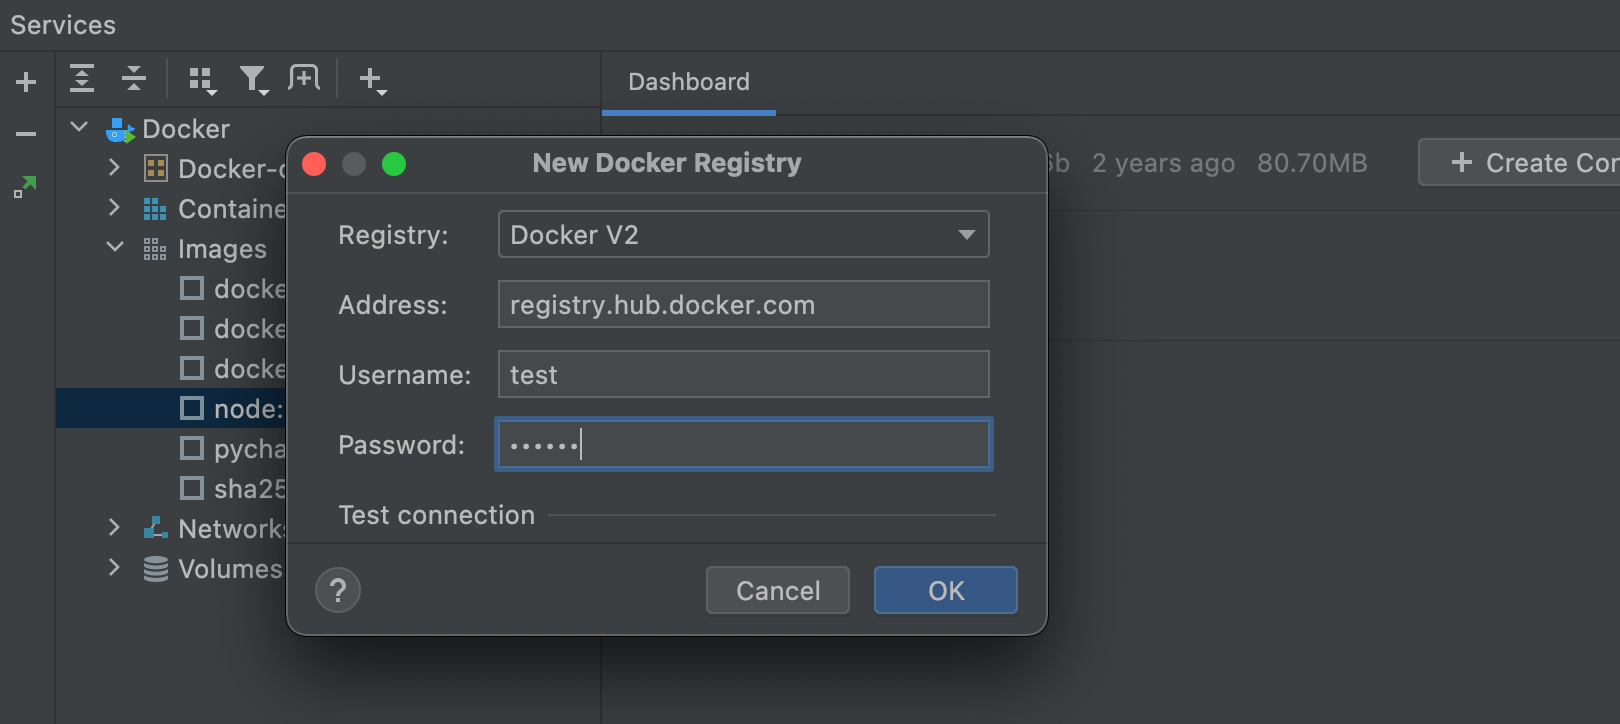 Improvements for Docker